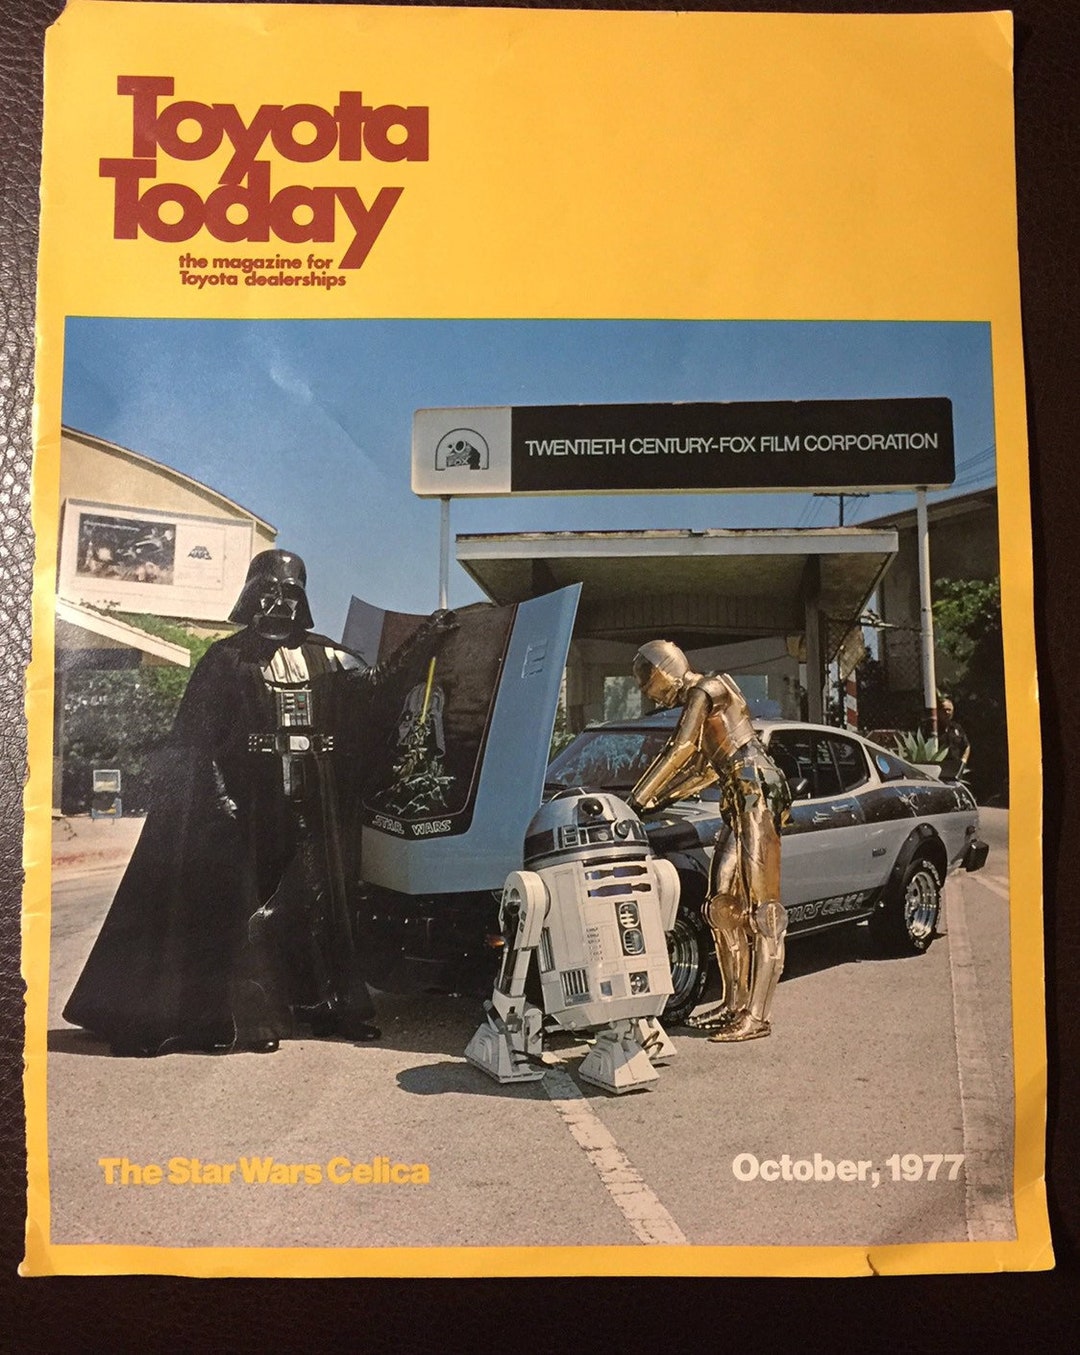 Star Wars Movie Poster 1977 Belgian (14x22)